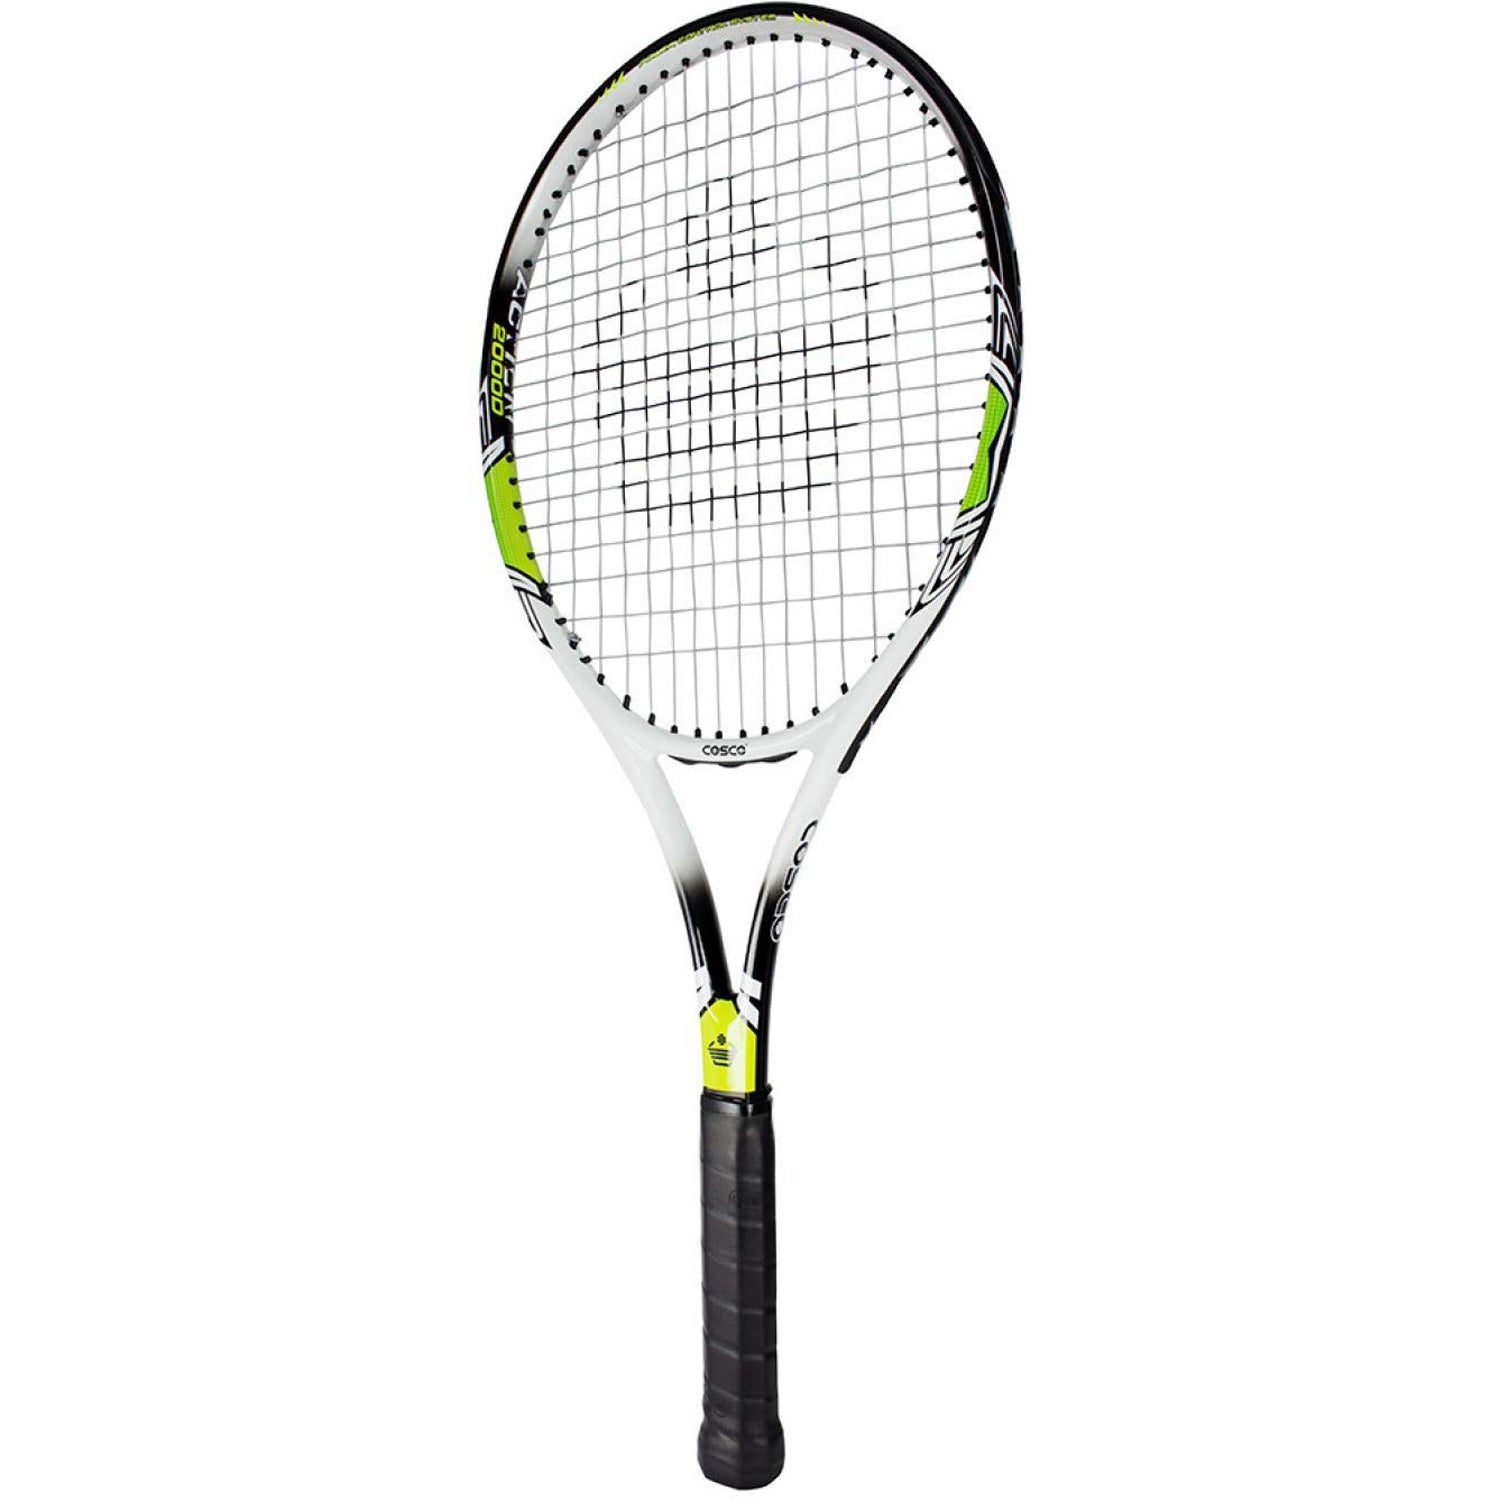 Cosco Action 2000D Strung Tennis Racket - Best Price online Prokicksports.com